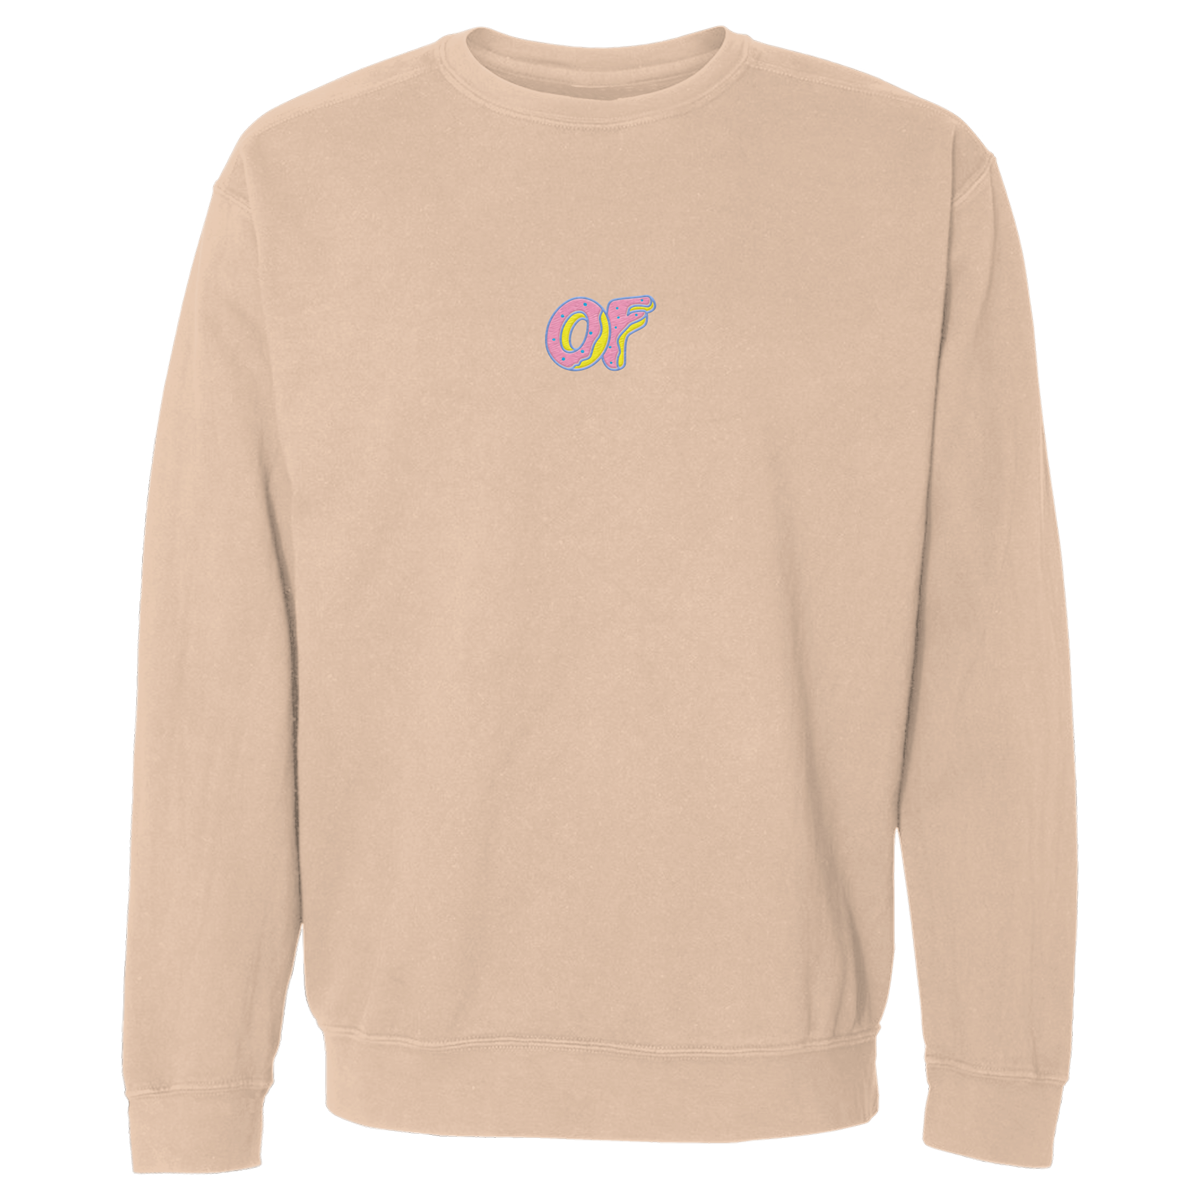 OF Donut Logo Embroidered Crewneck Sweatshirt - Sandstone-Odd Future